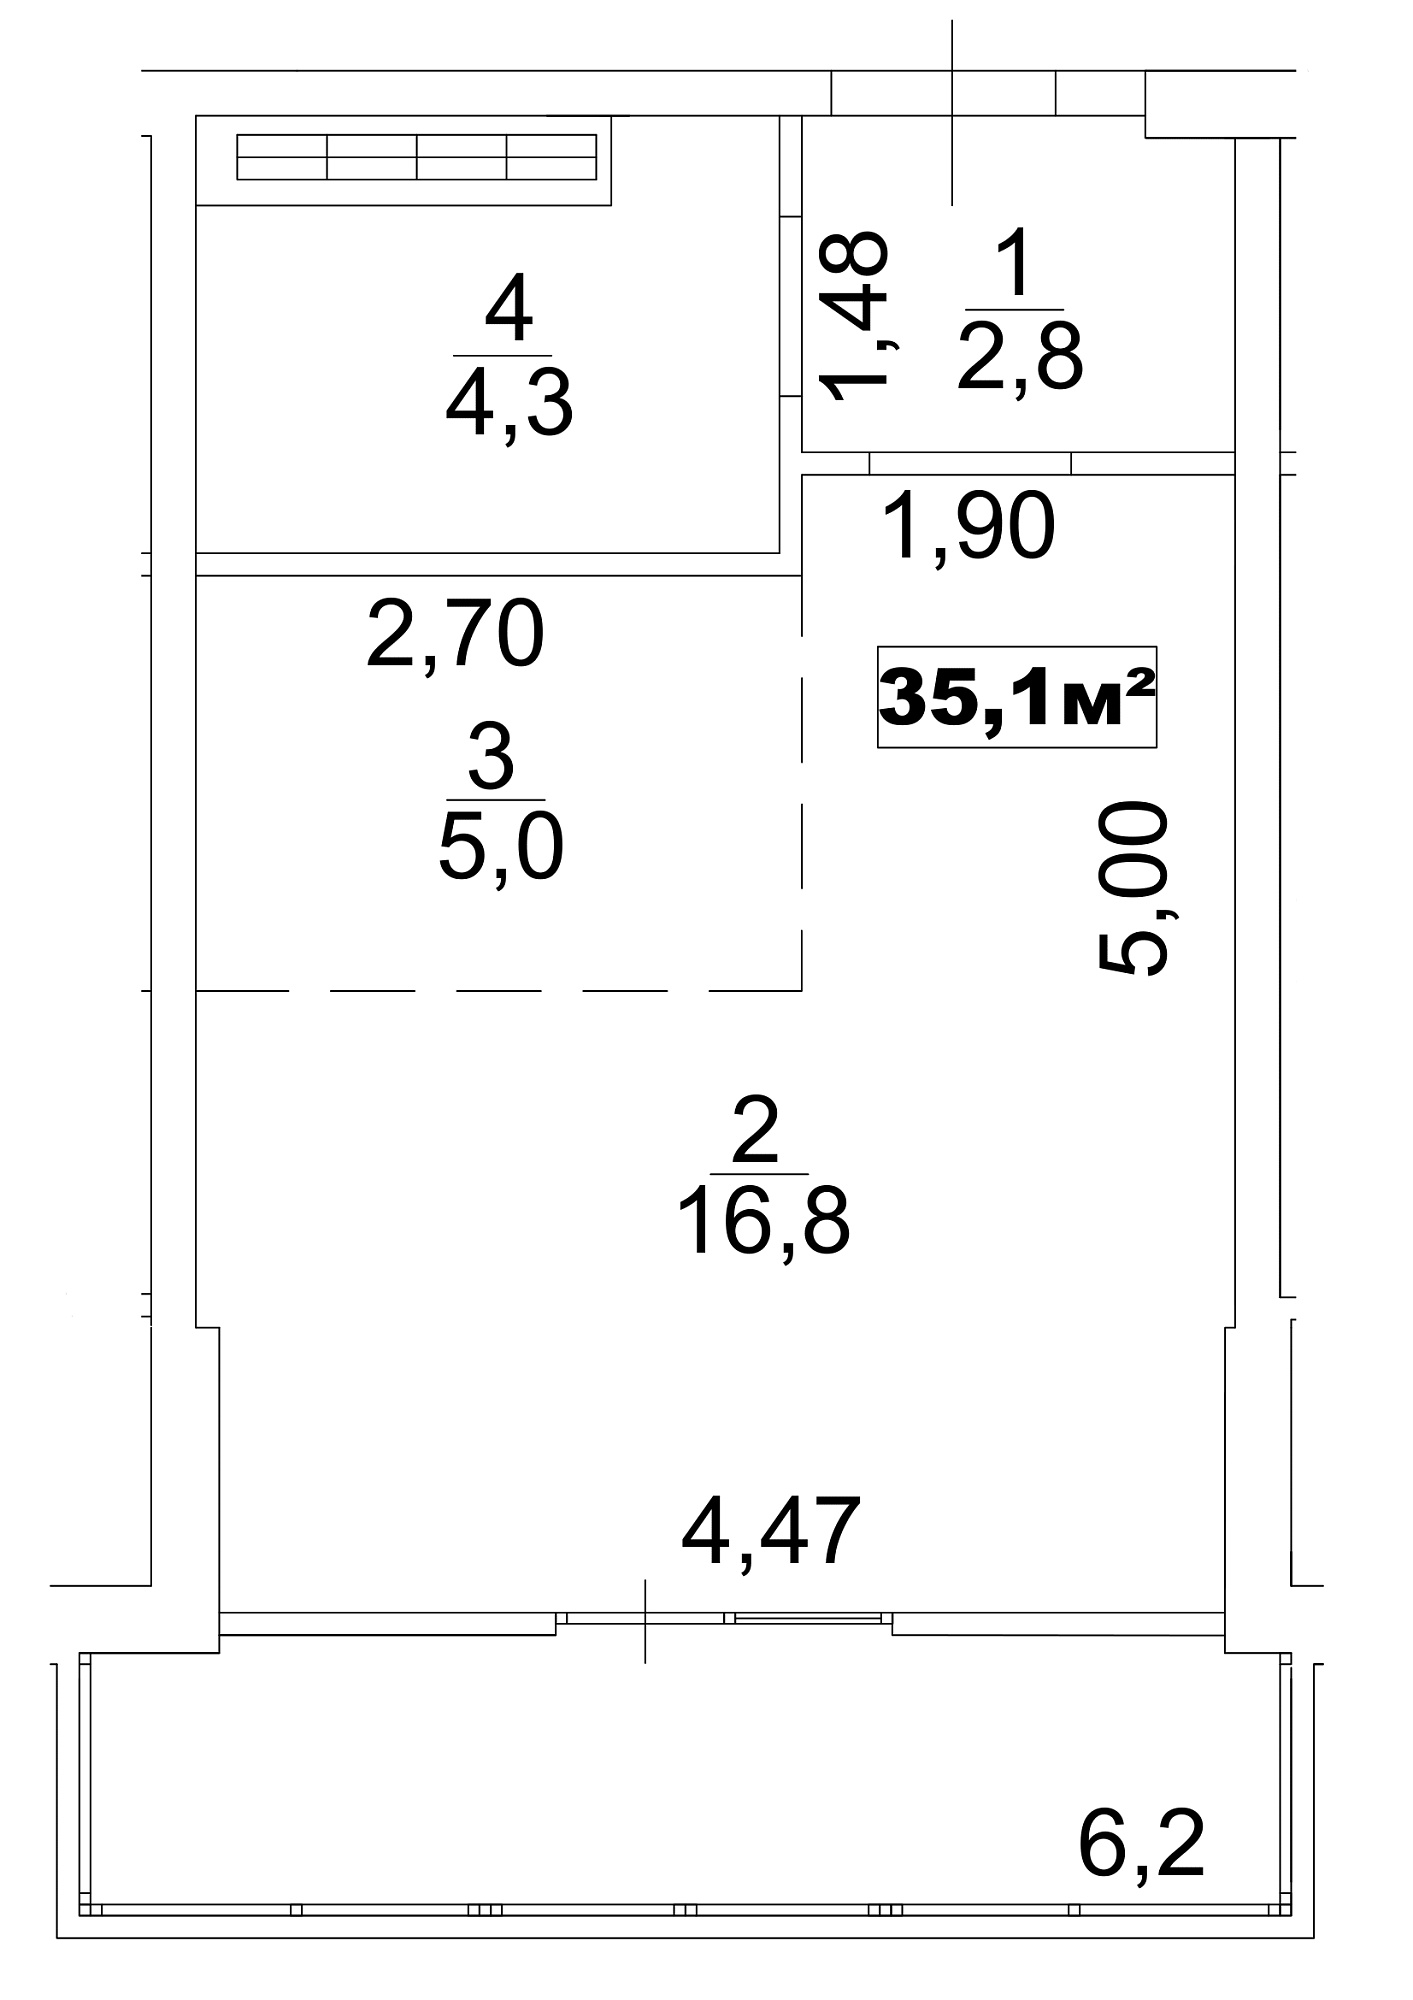 Планировка Smart-квартира площей 35.1м2, AB-13-02/0007б.